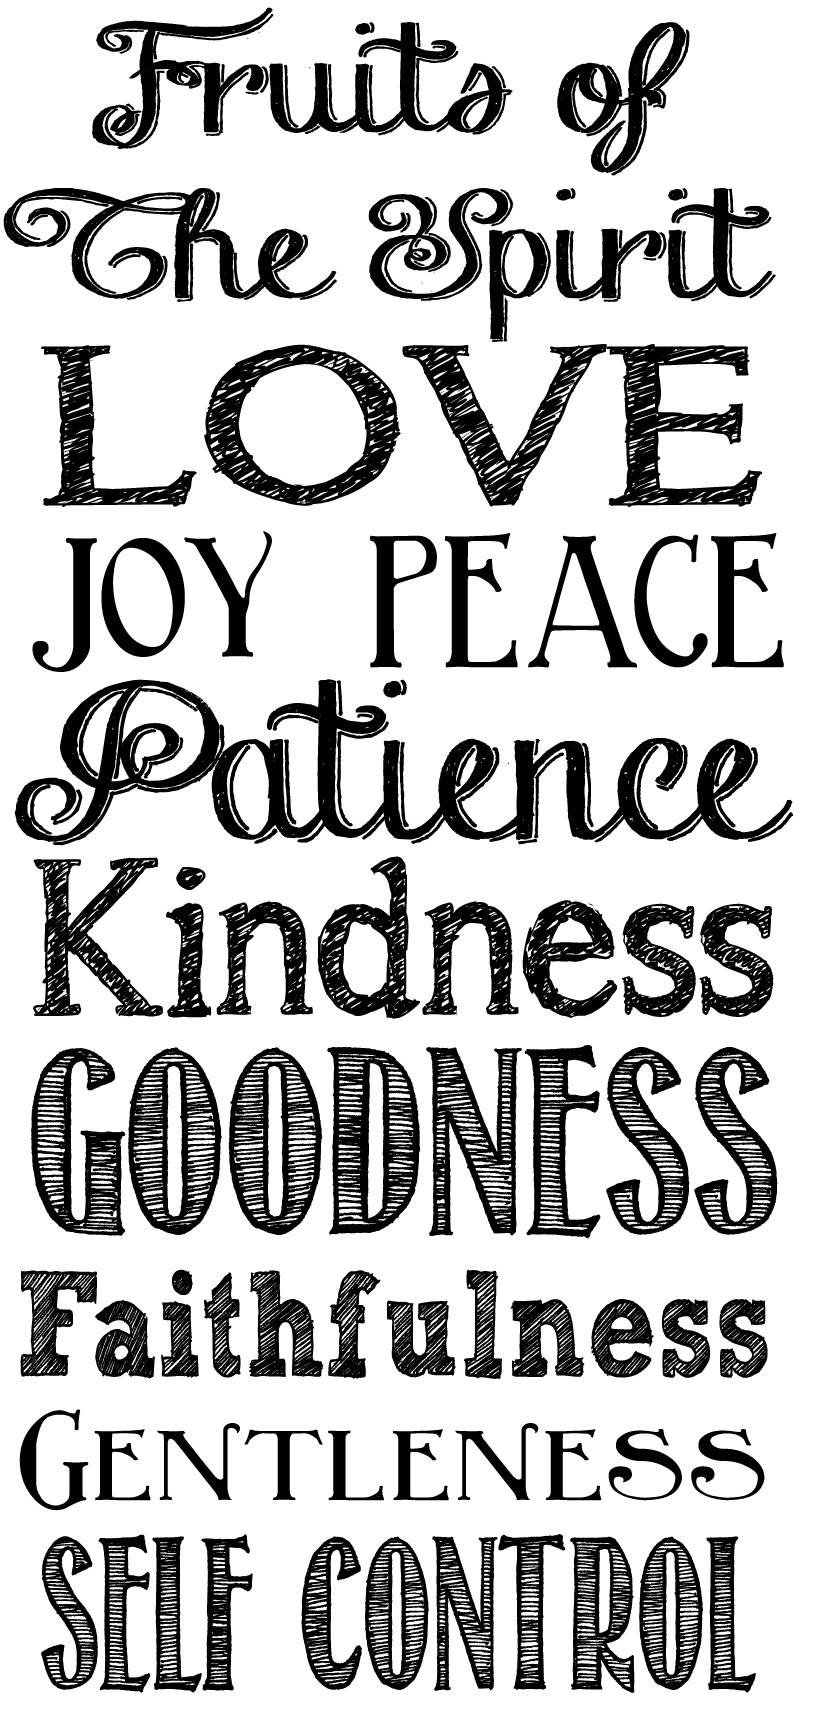 Kindness gentleness